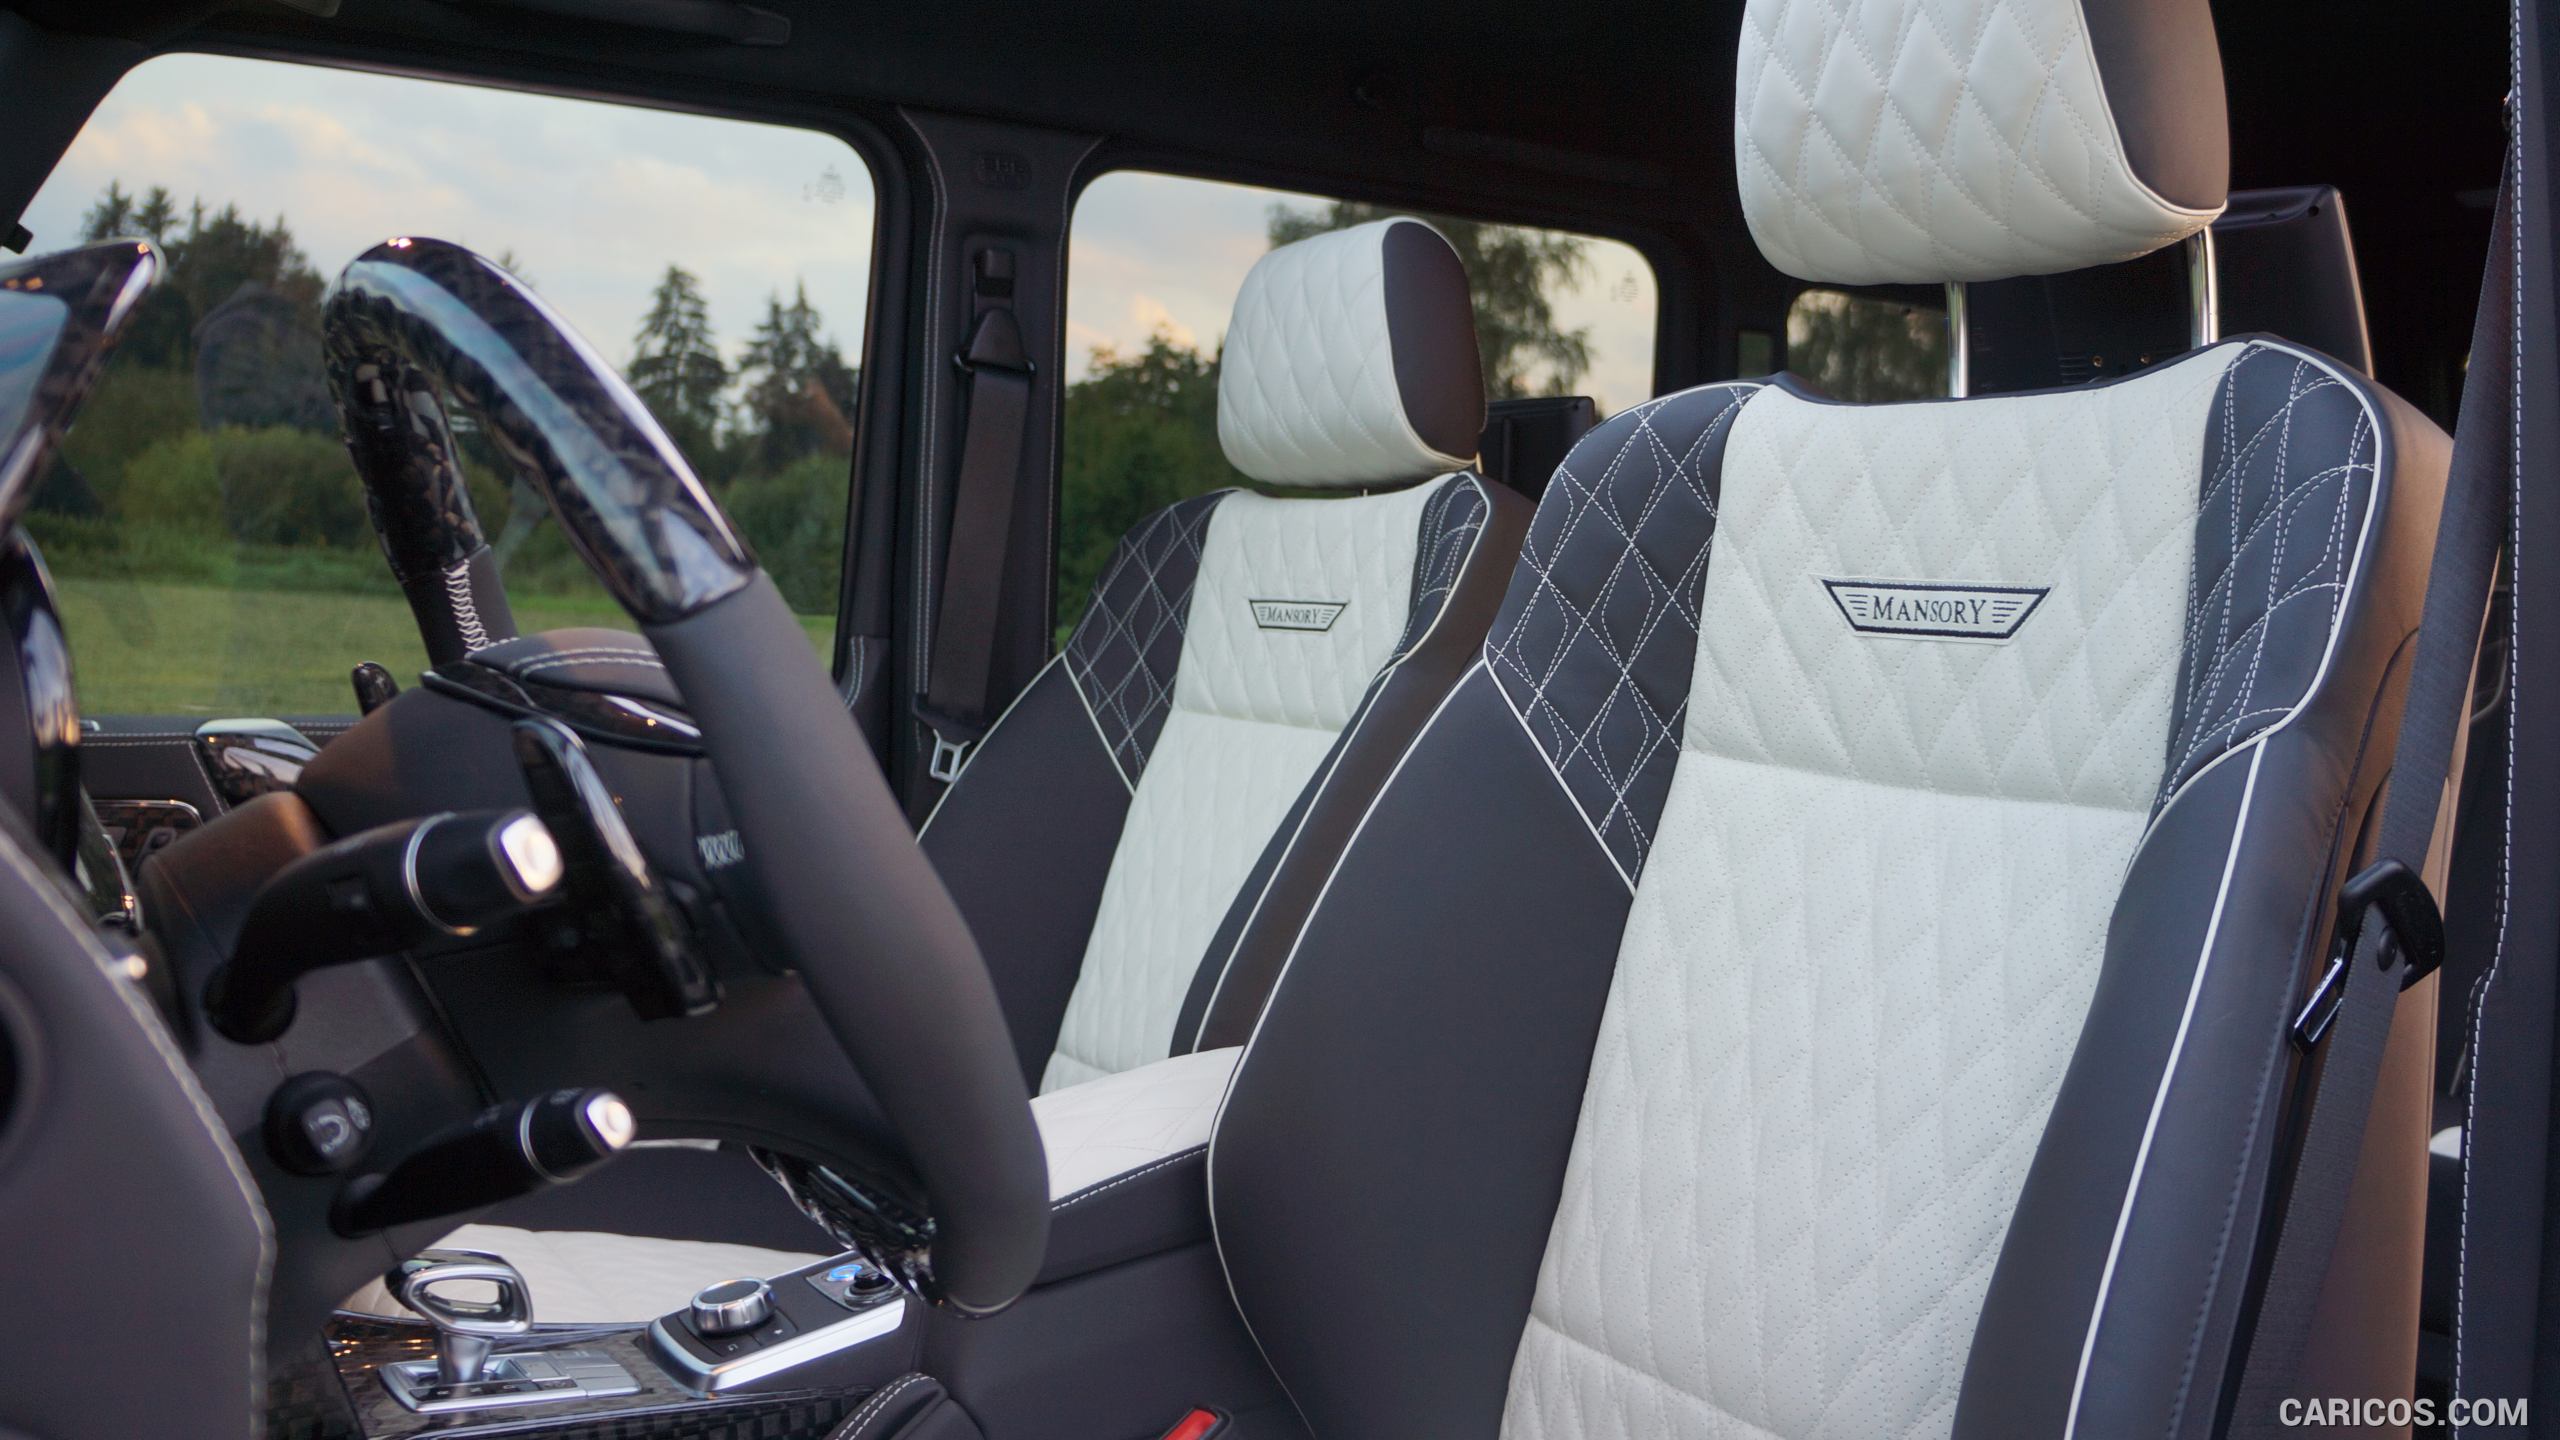 2016 MANSORY GRONOS Black Edition based on Mercedes G63 AMG - Interior, #12 of 16